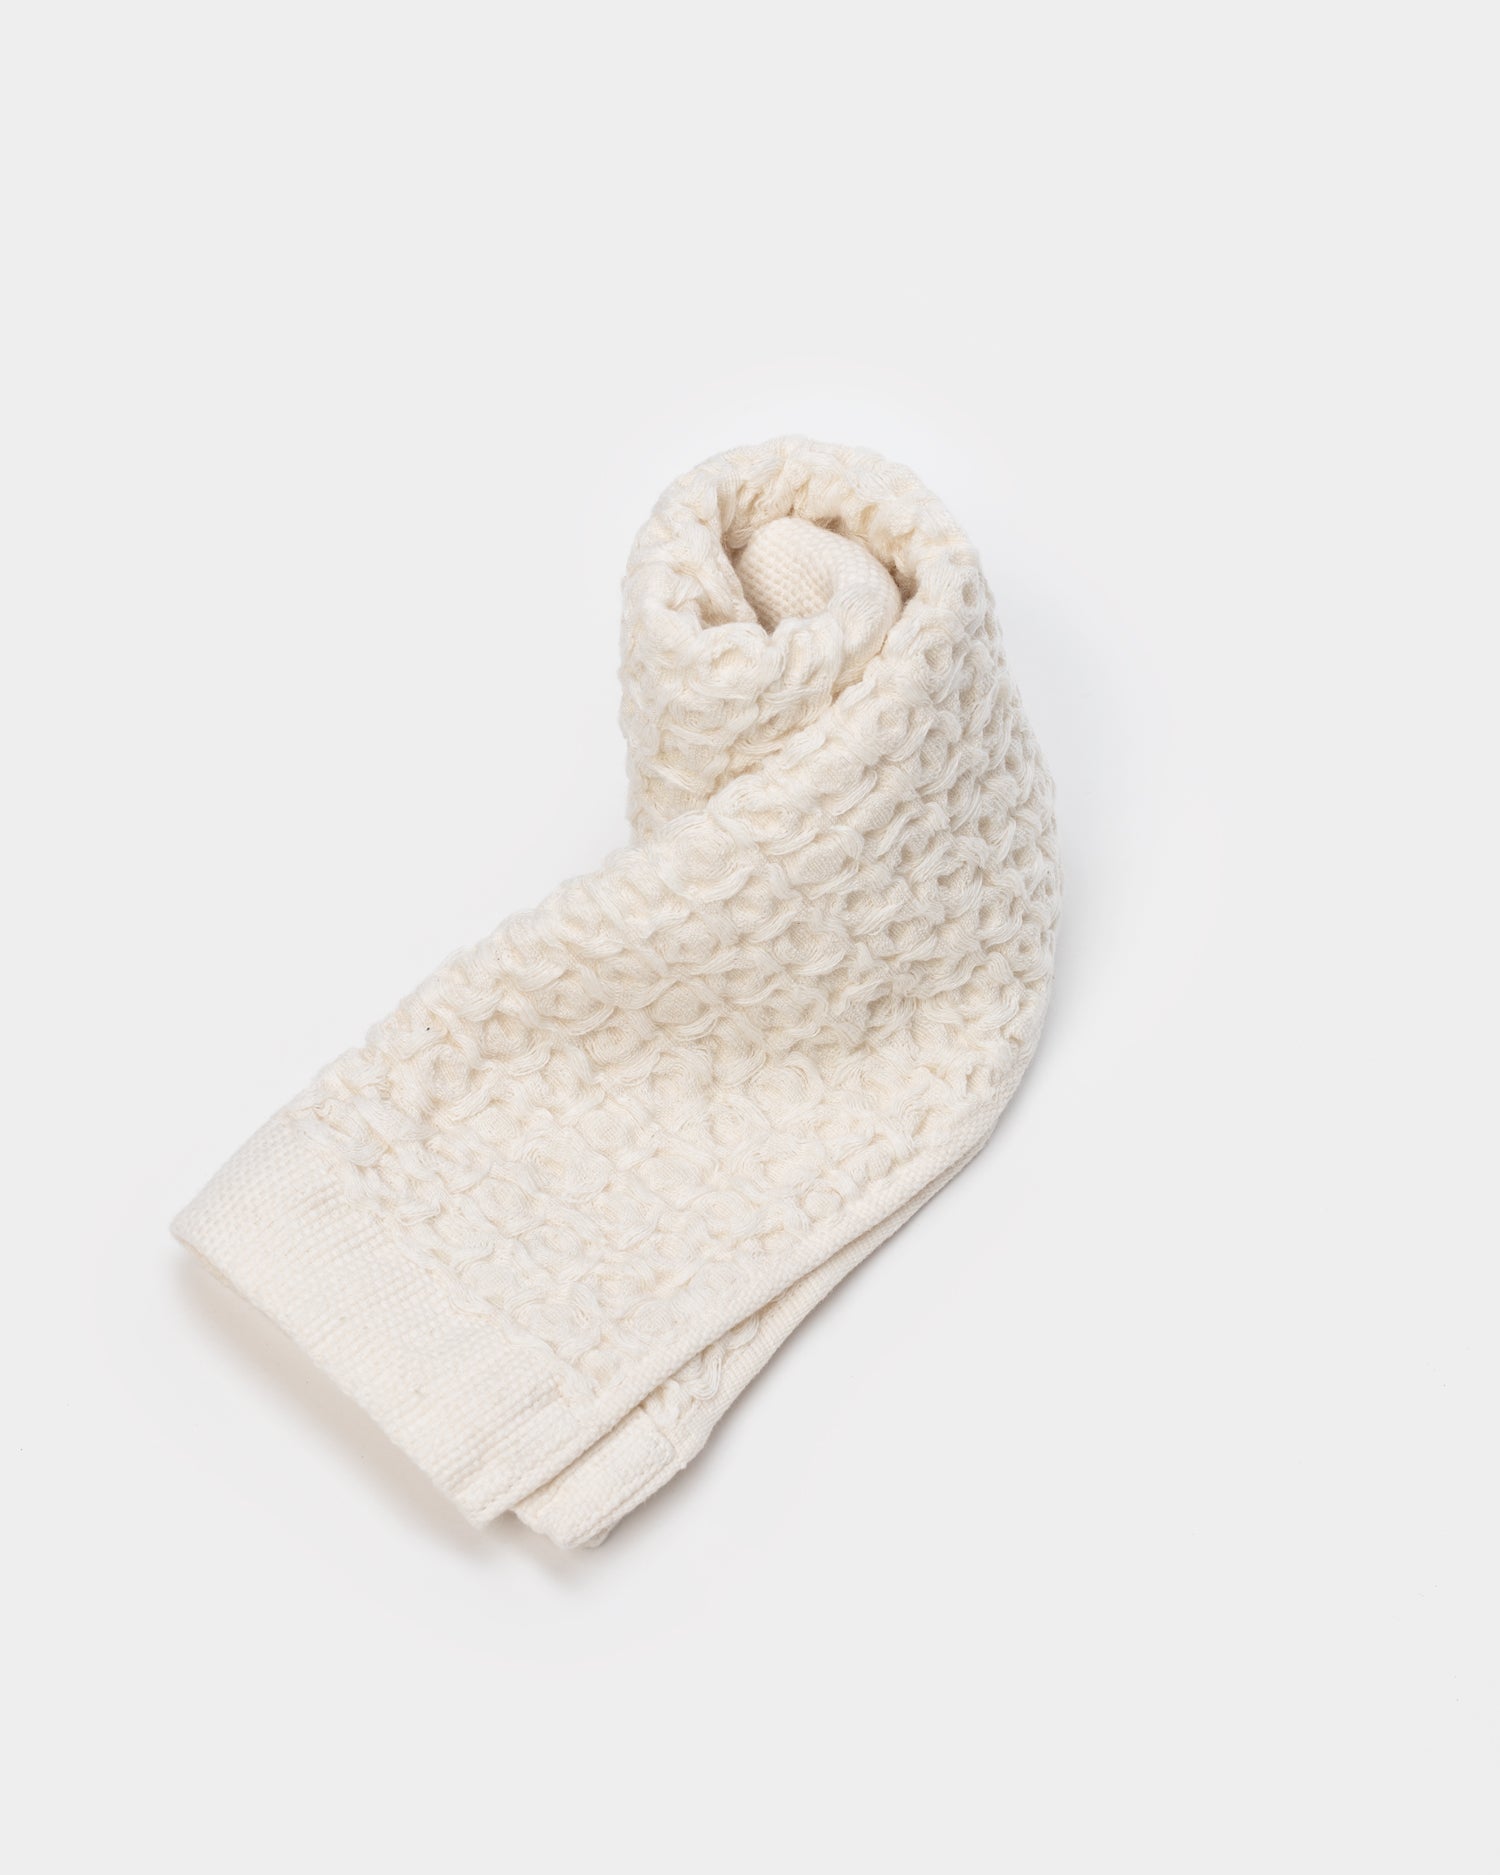 Lattice Linen Washcloth - Ivory